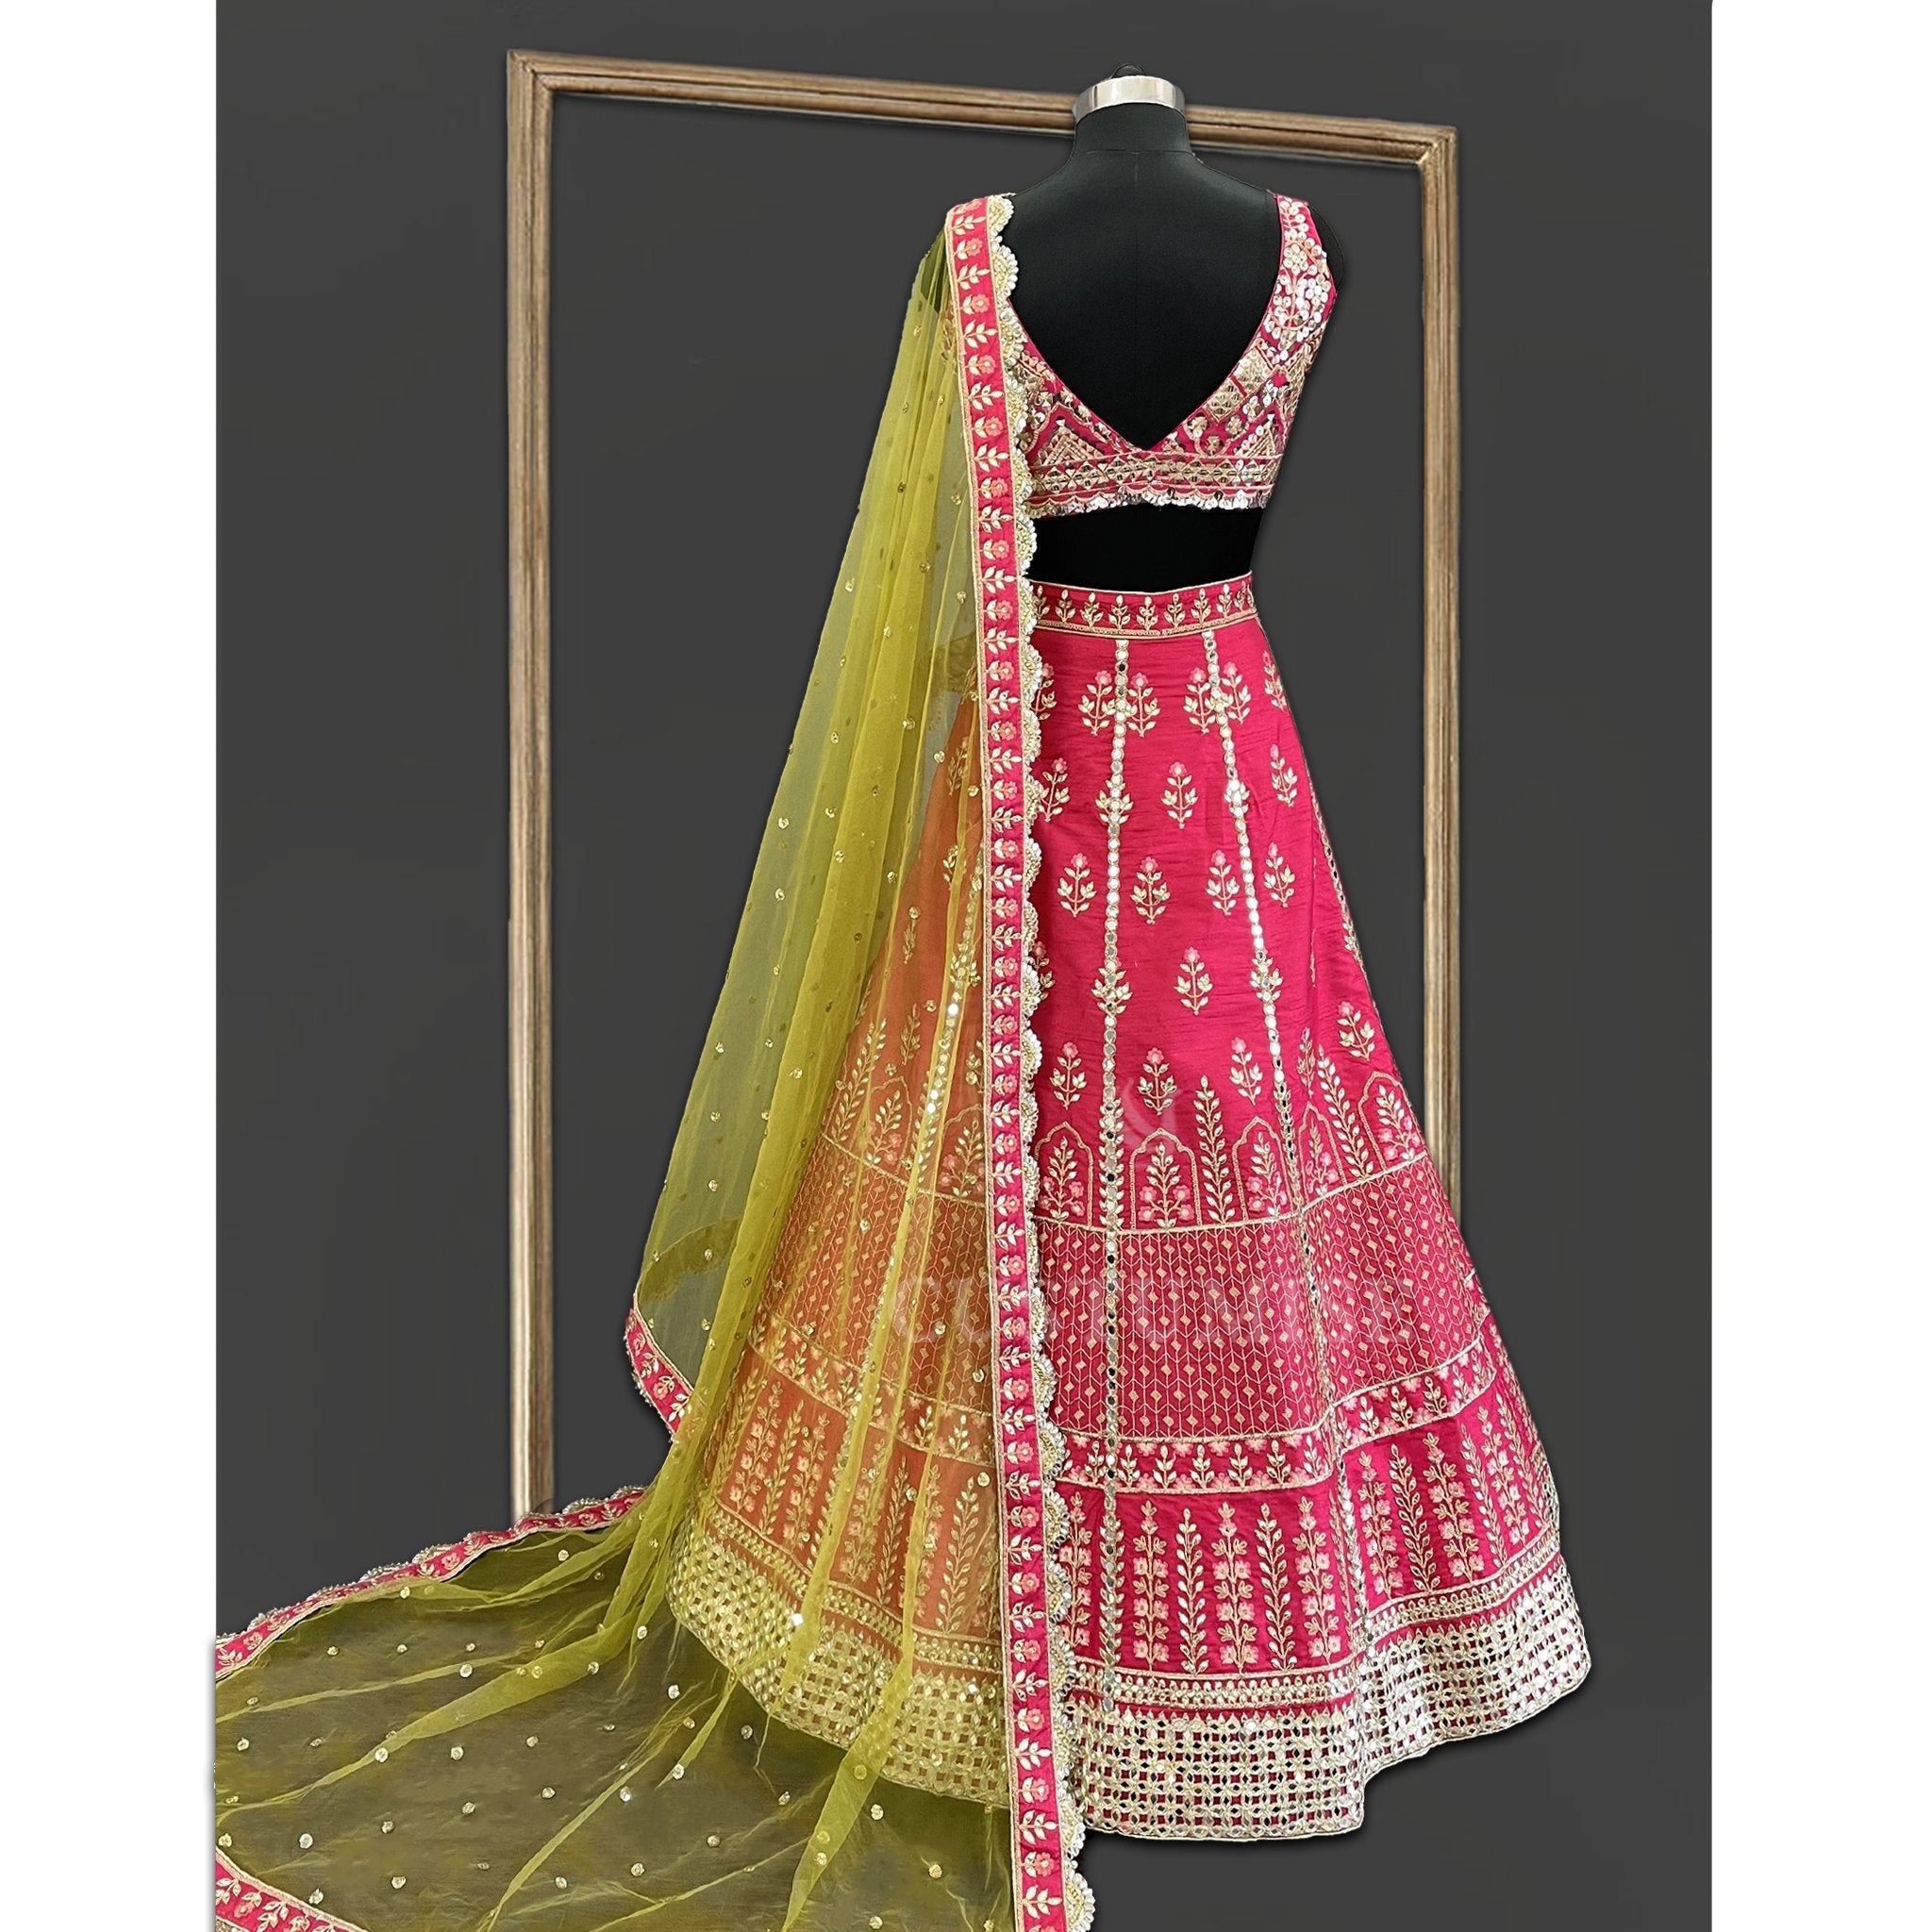 Enchanting Reflections: Reddish Pink Mirror Lehenga - Indian Designer Bridal Wedding Outfit